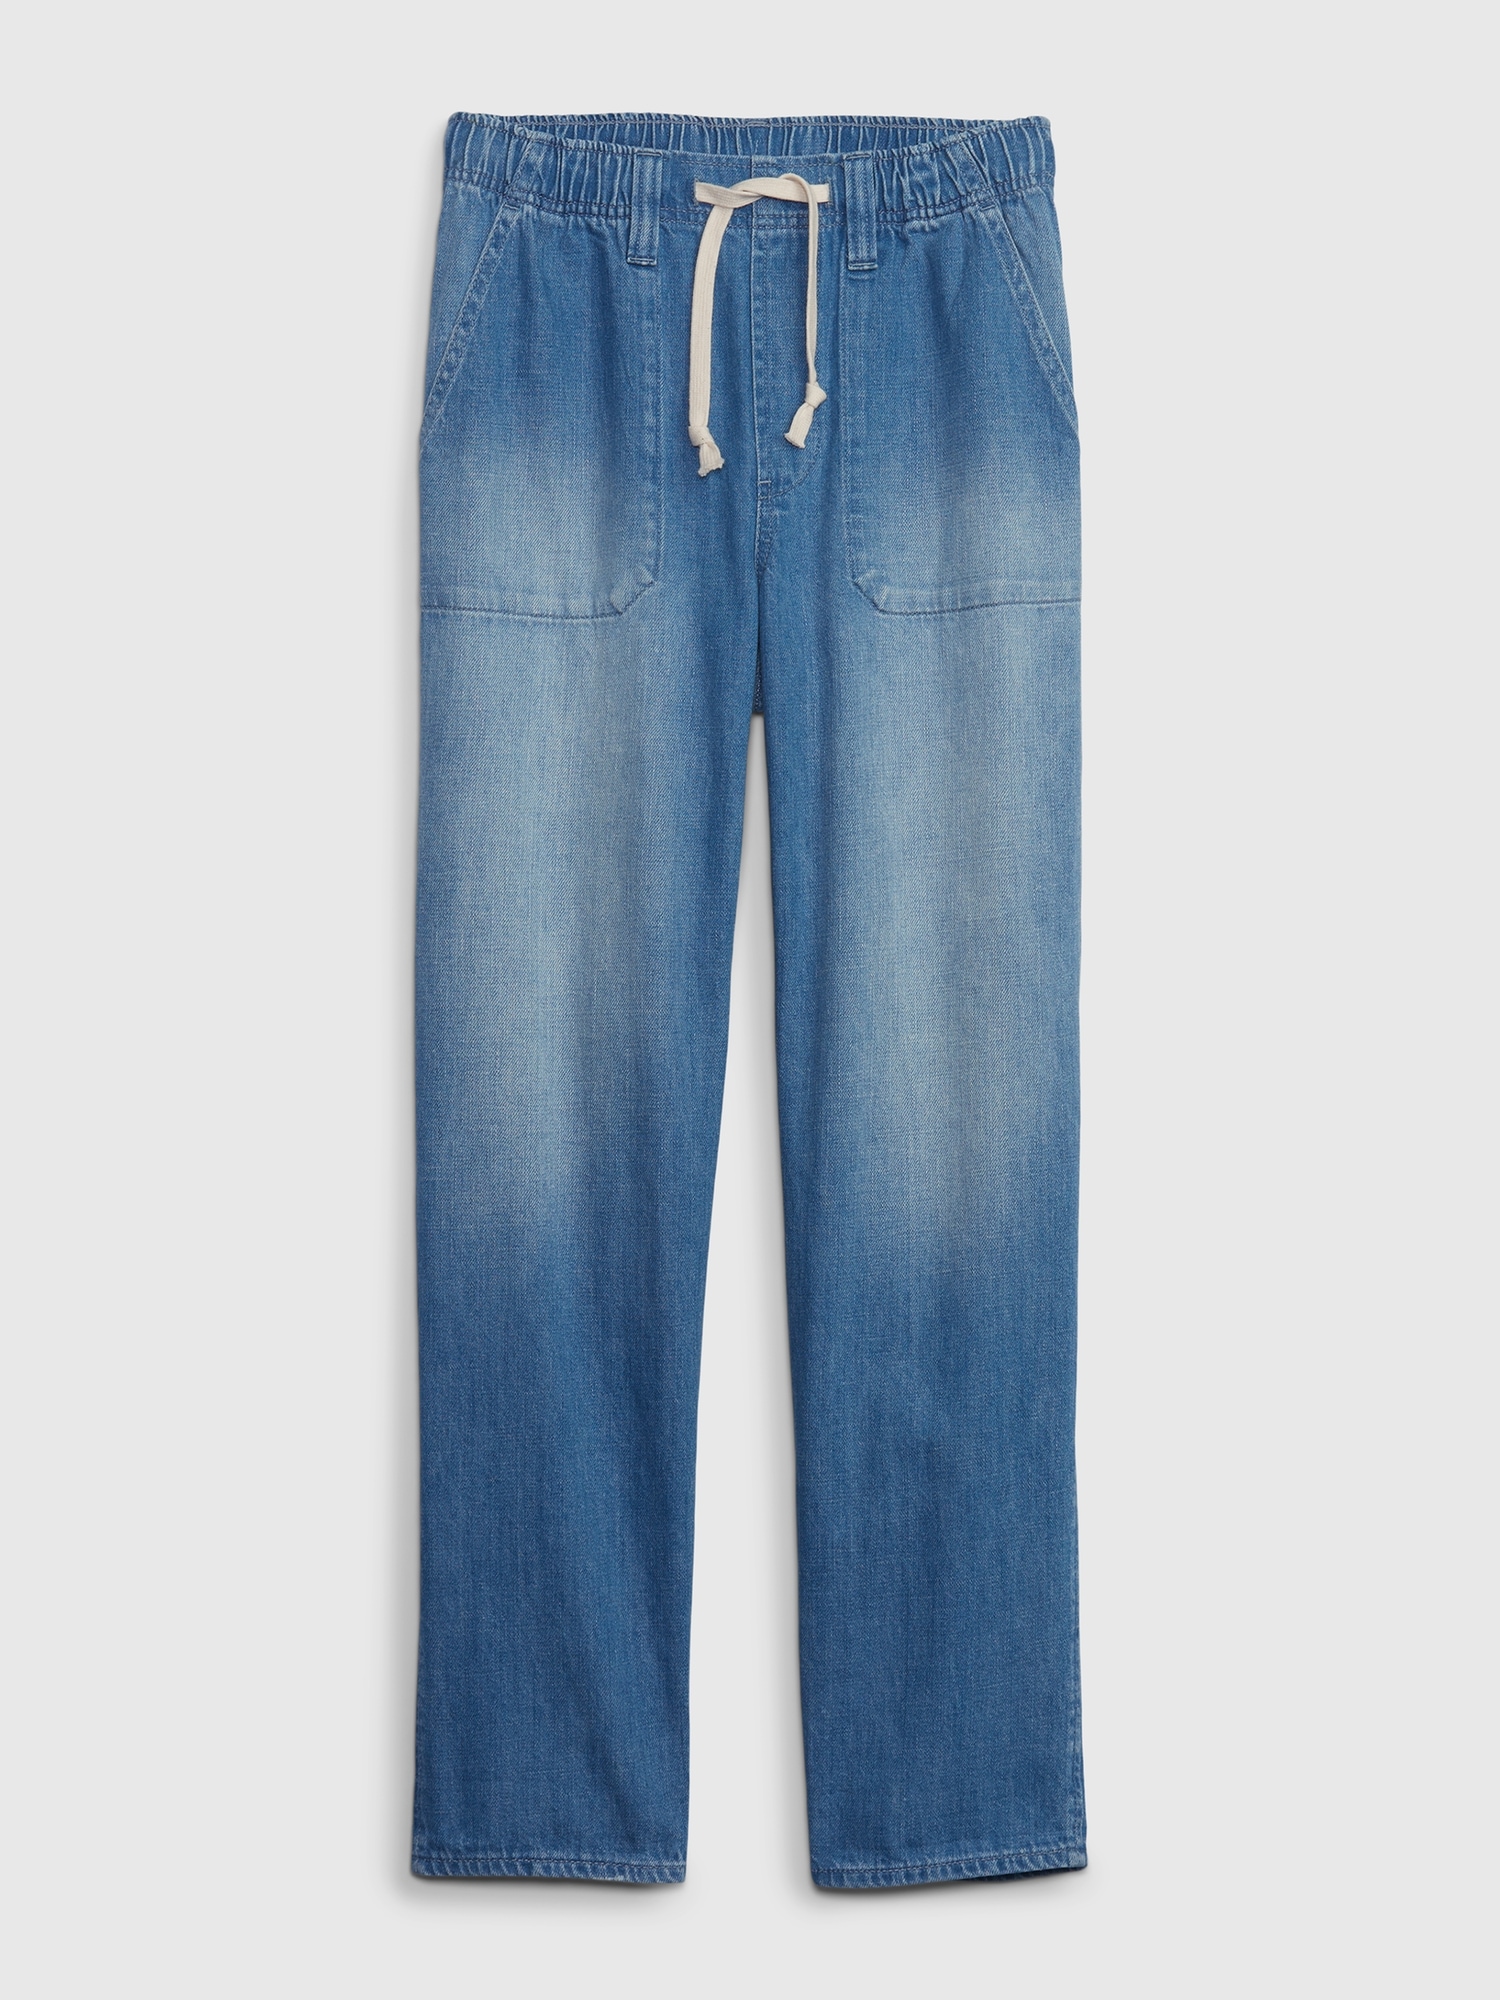 INC Denim Pull-On Elastic Waist Mid Rise Stretch Blue Jeans Women's Size 6